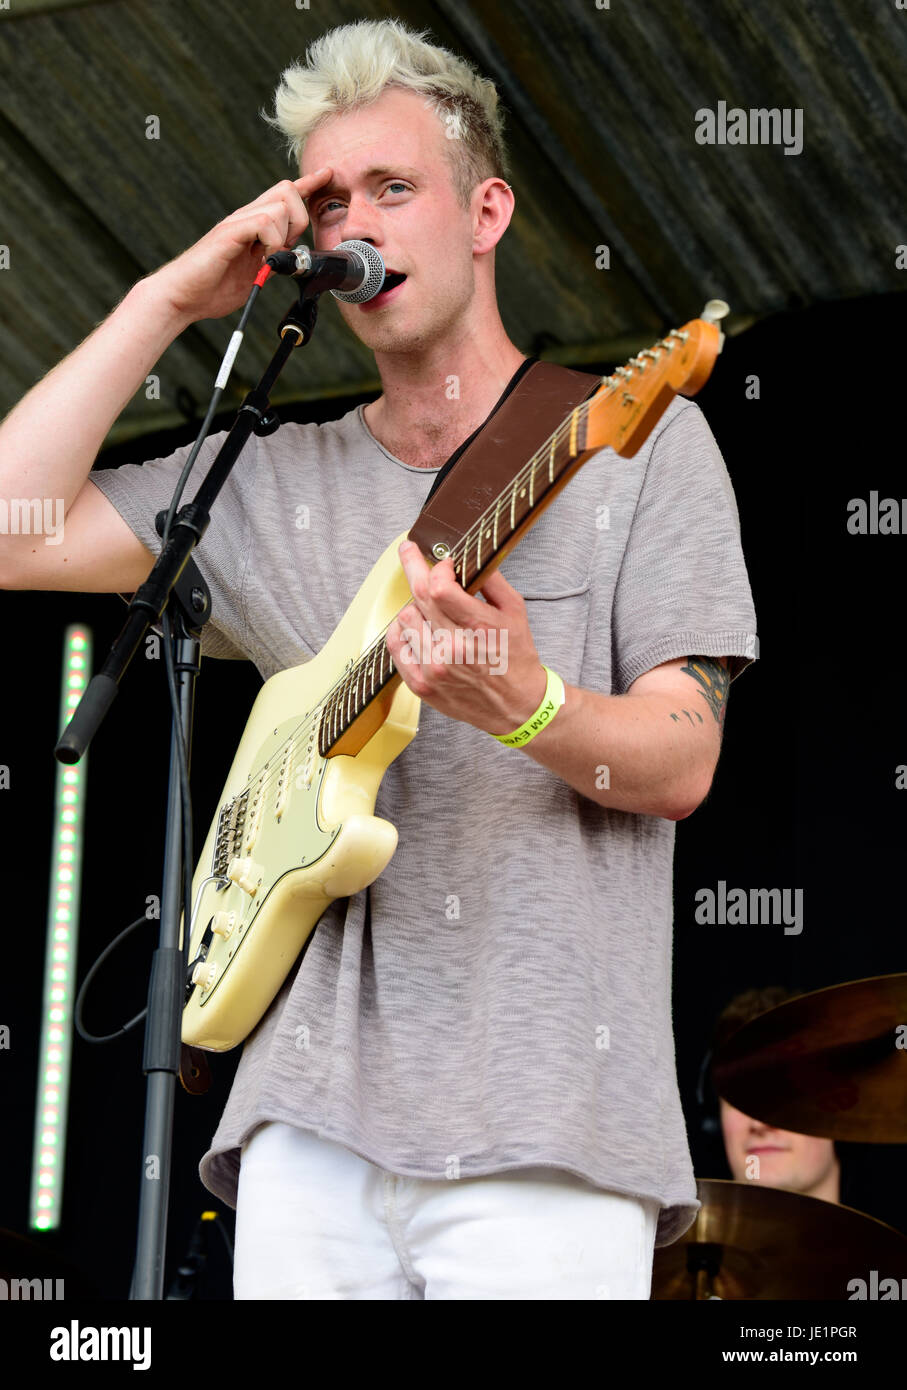 Harry Baker performing at Hyfest Music Festival, Headley, Hampshire, UK. 17 June 2017. Stock Photo